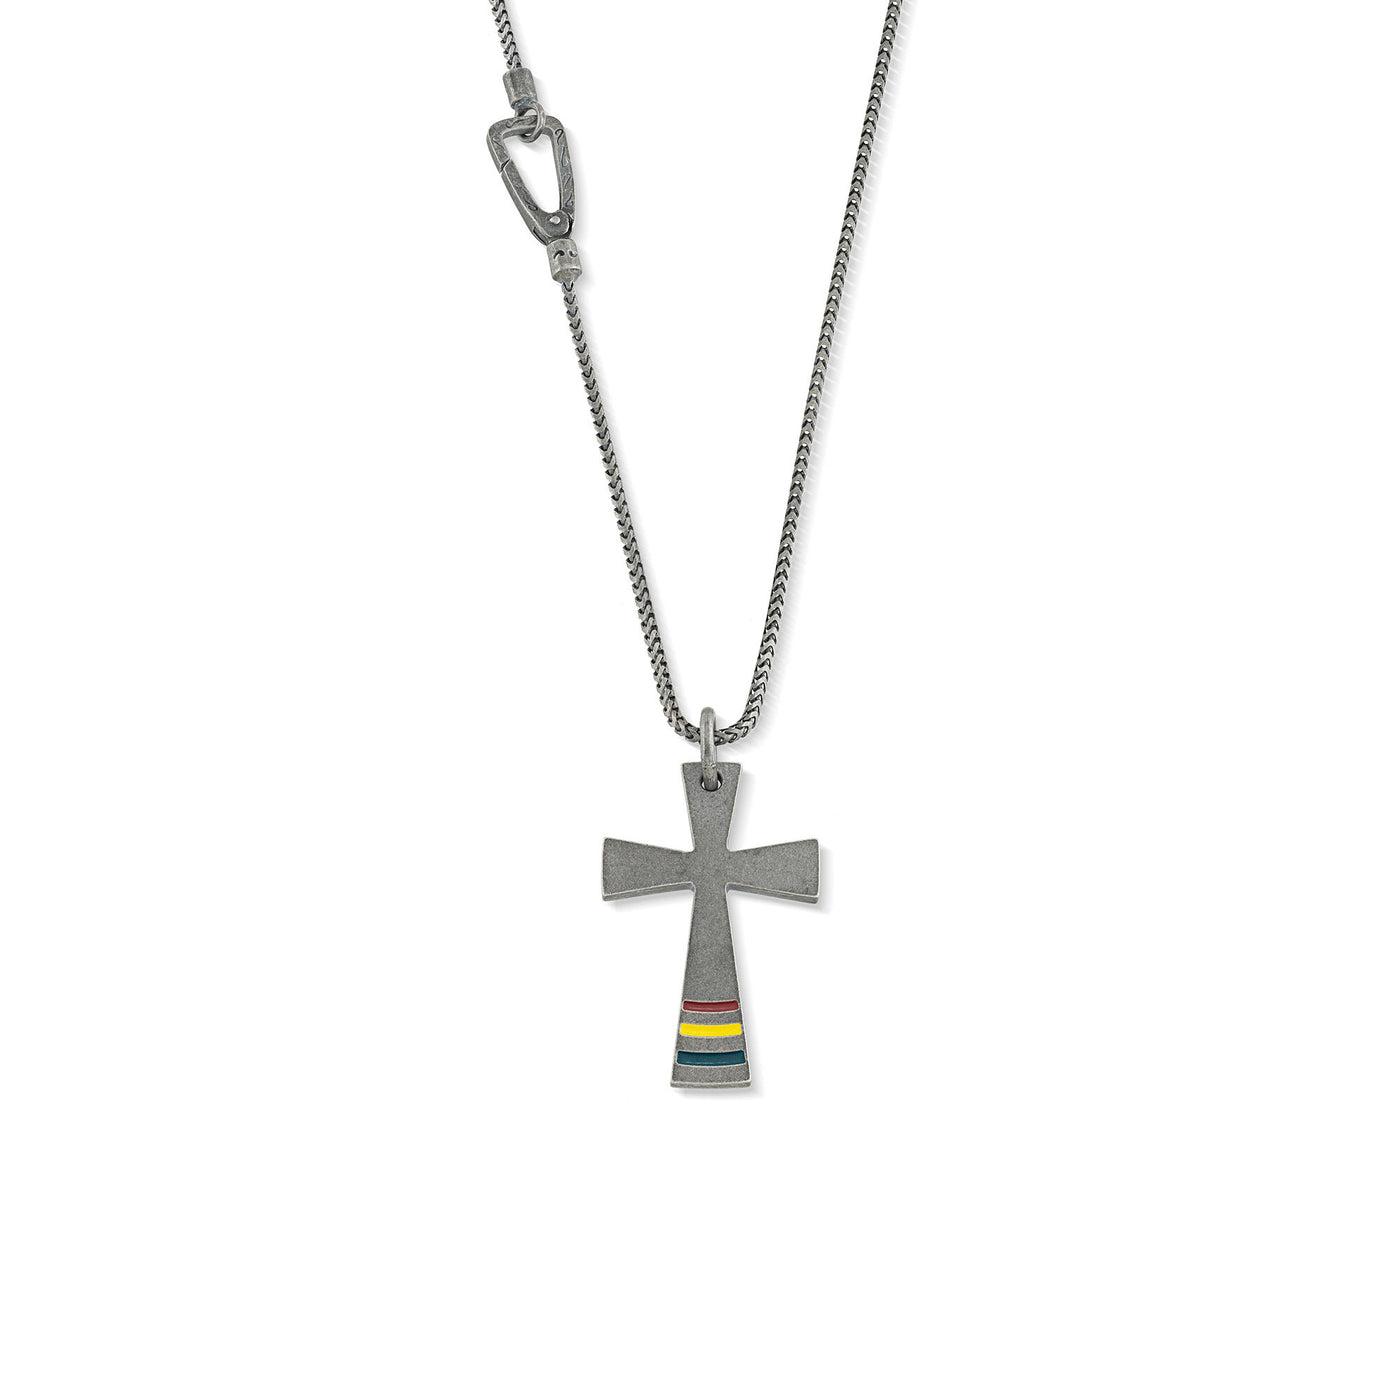 The Cross Rainbow Pendant